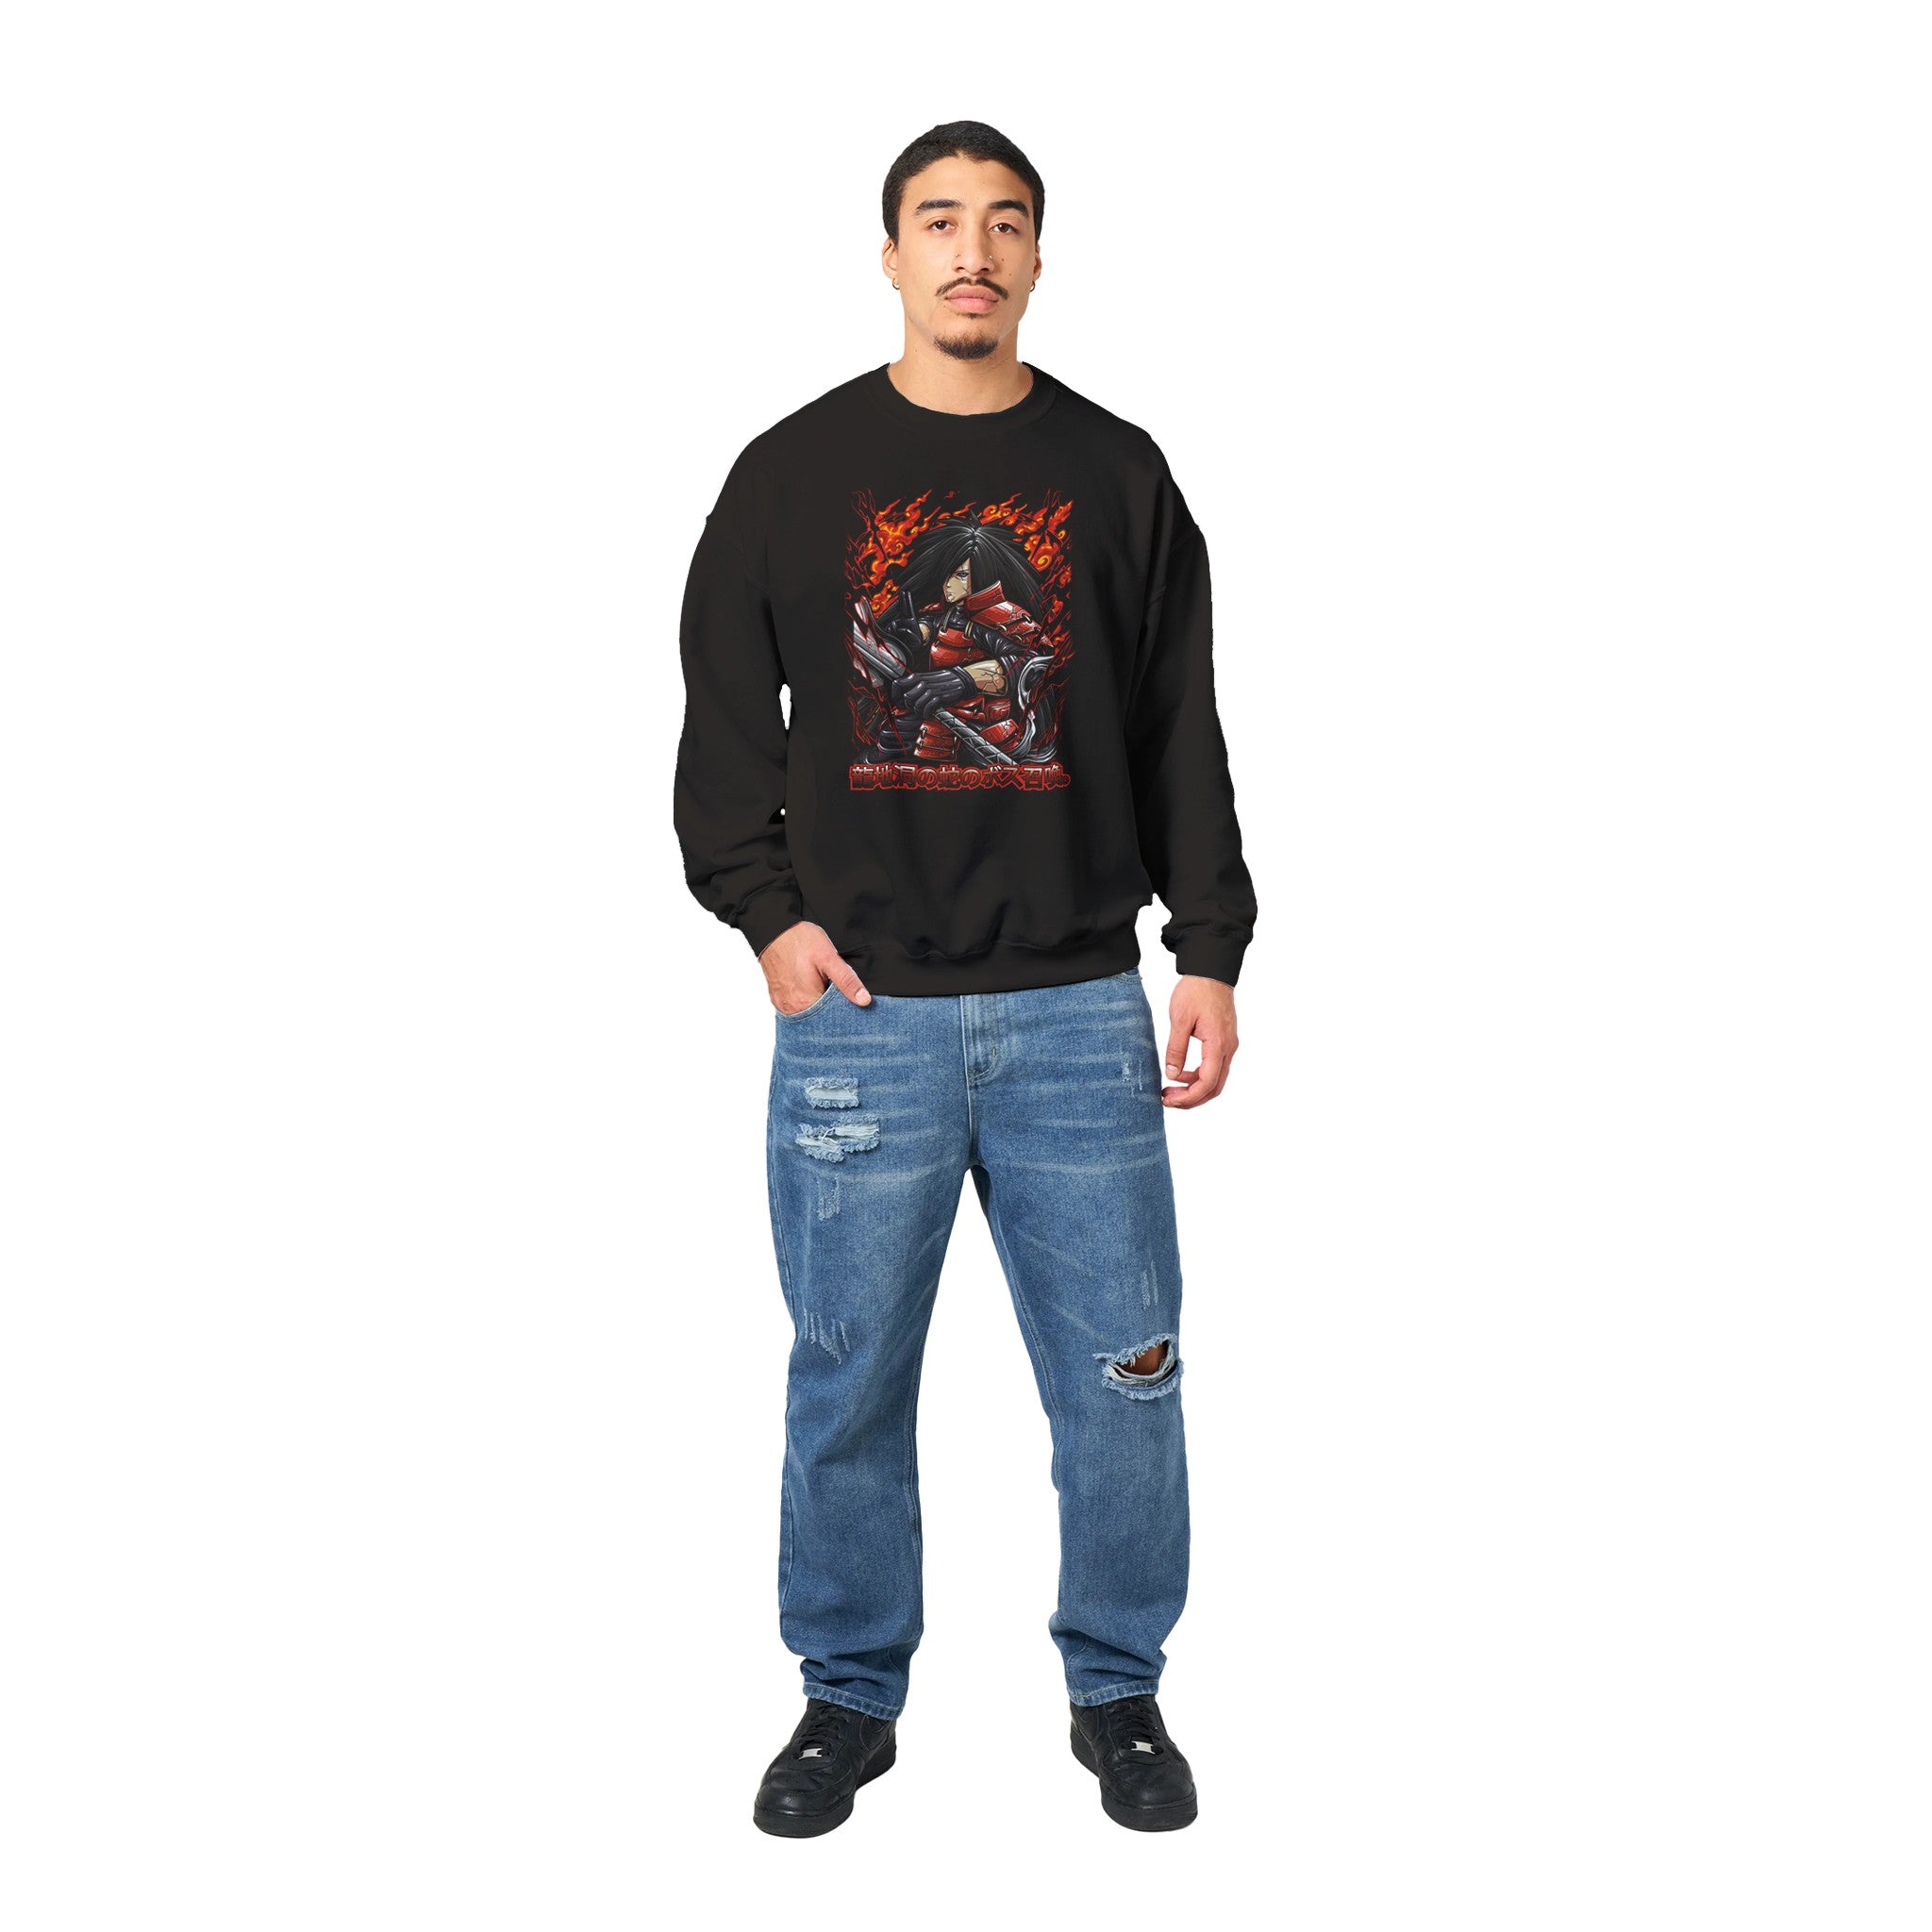 shop and buy Naruto, Madara anime clothing sweatshirt/jumper/longsleeve